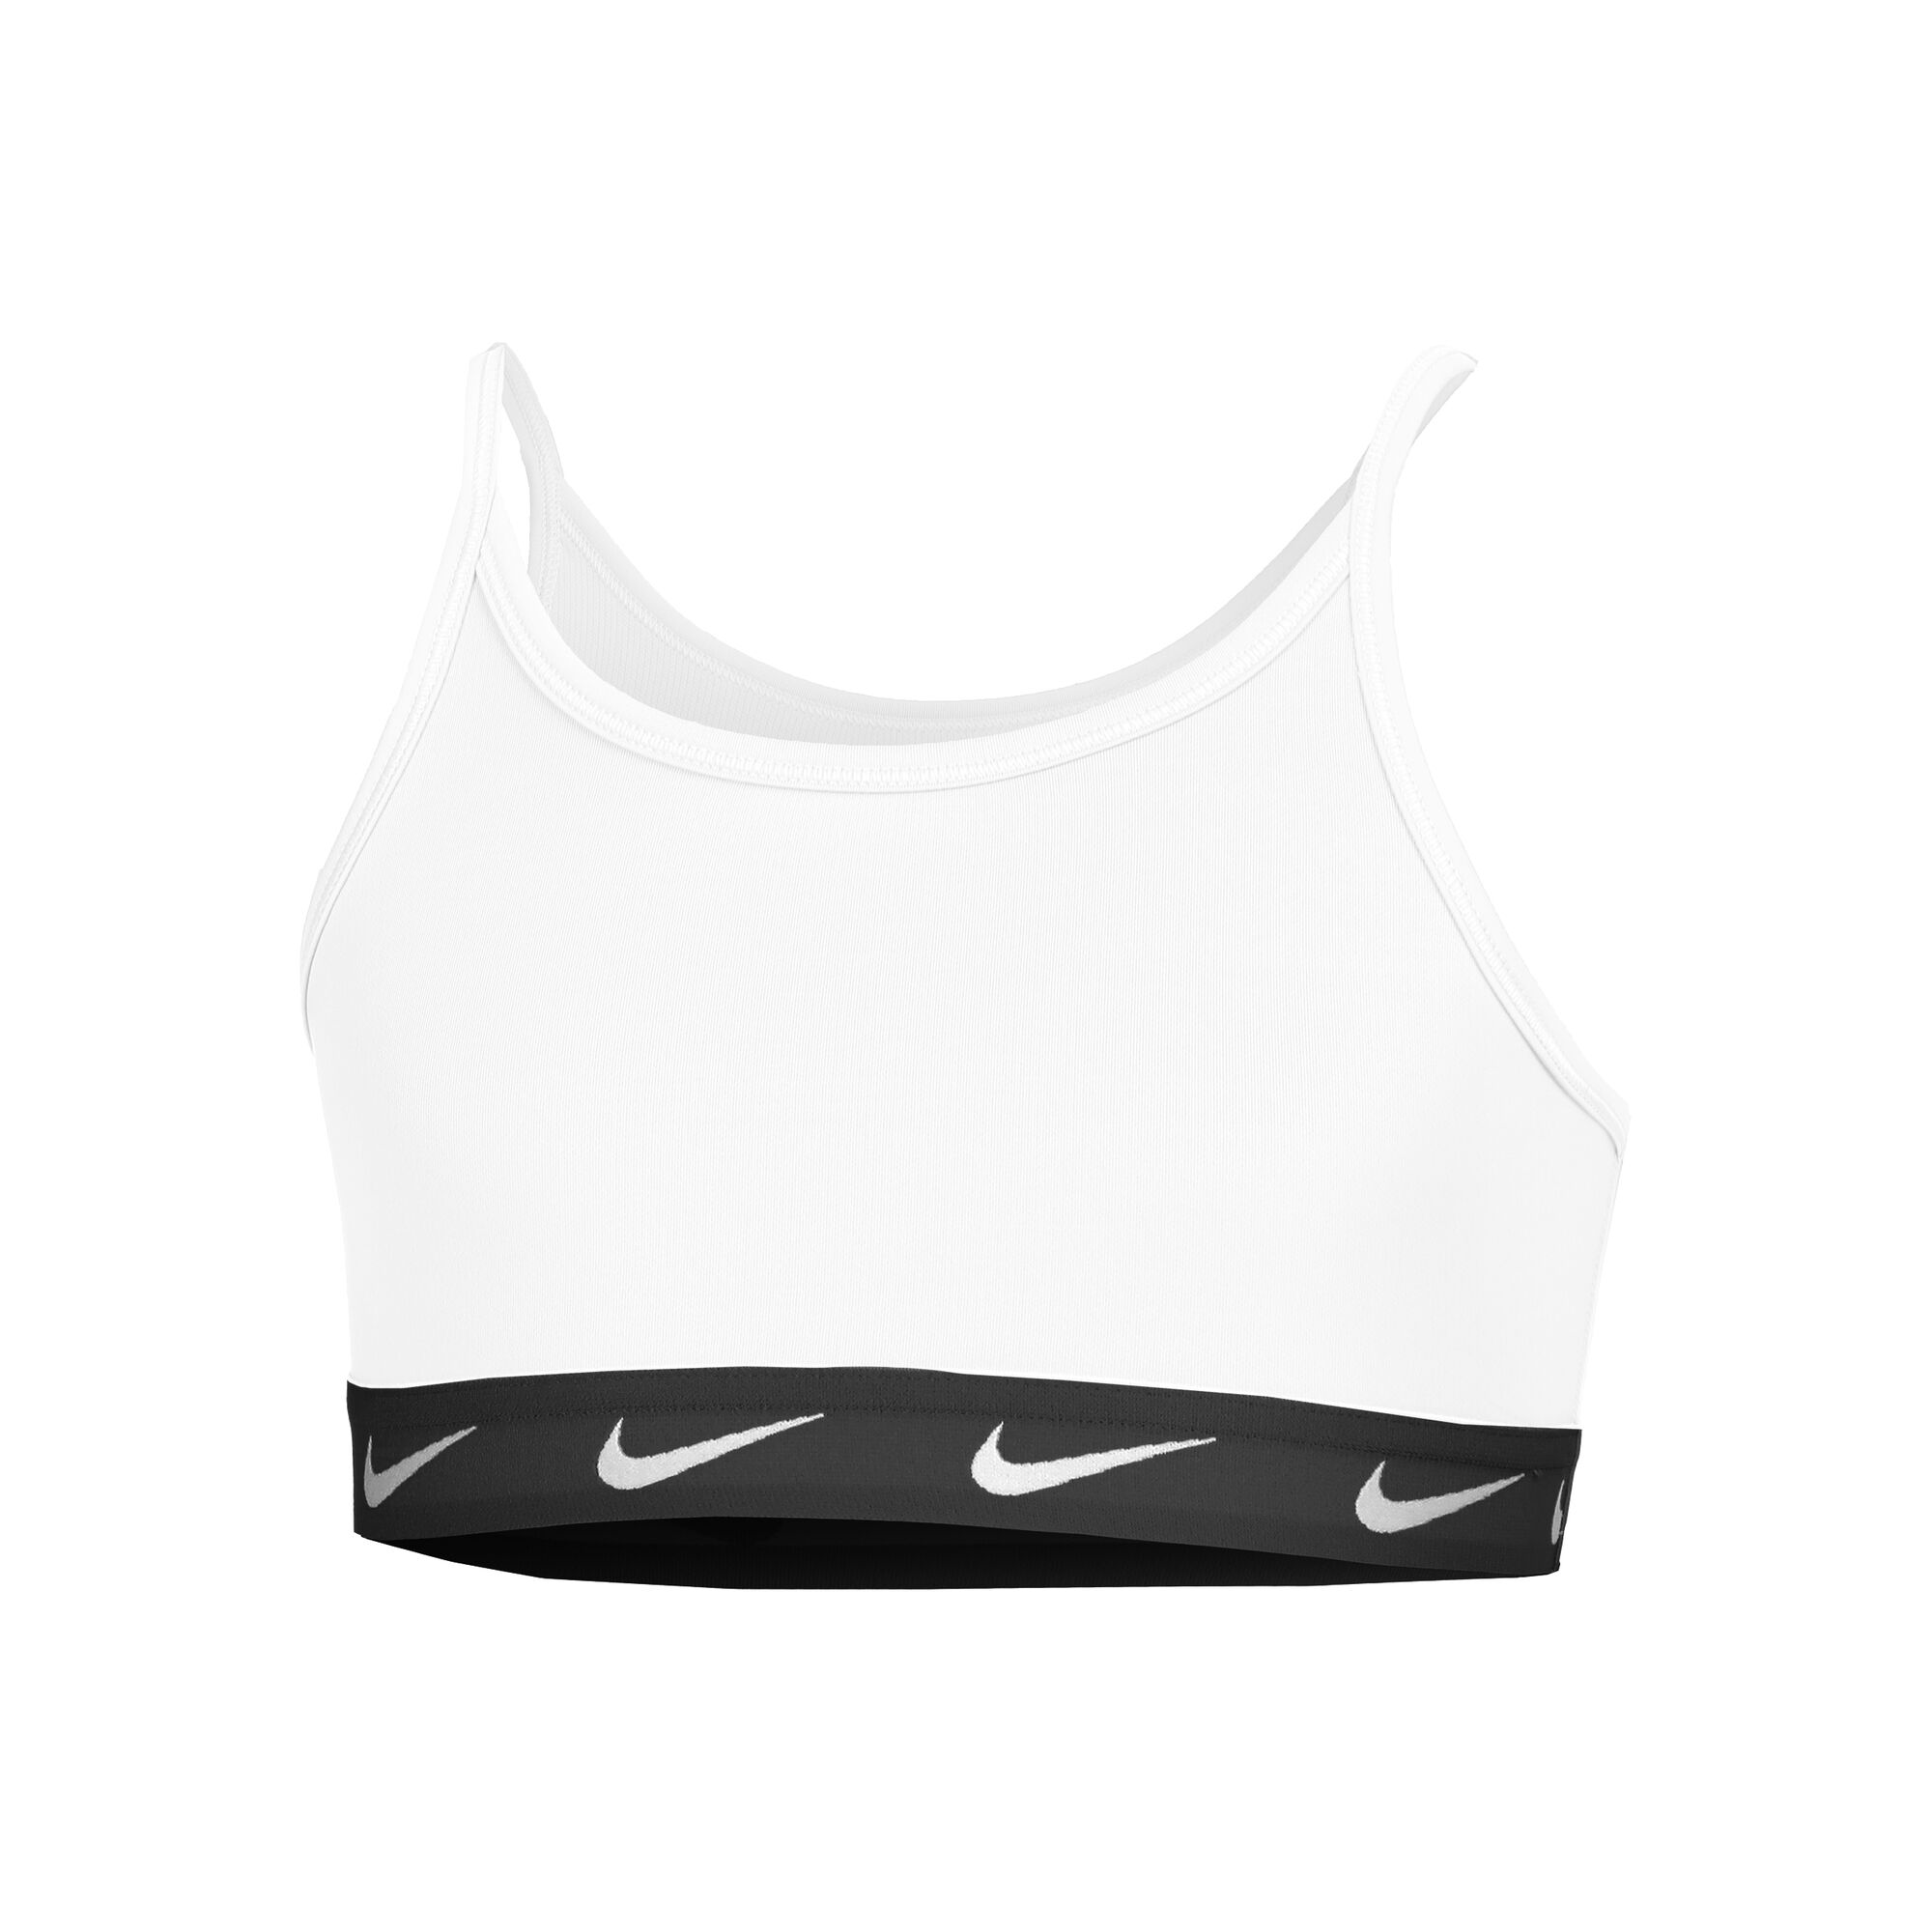 Nike Pro Sports Bra - Girls - Black/White - Youth X-Large 